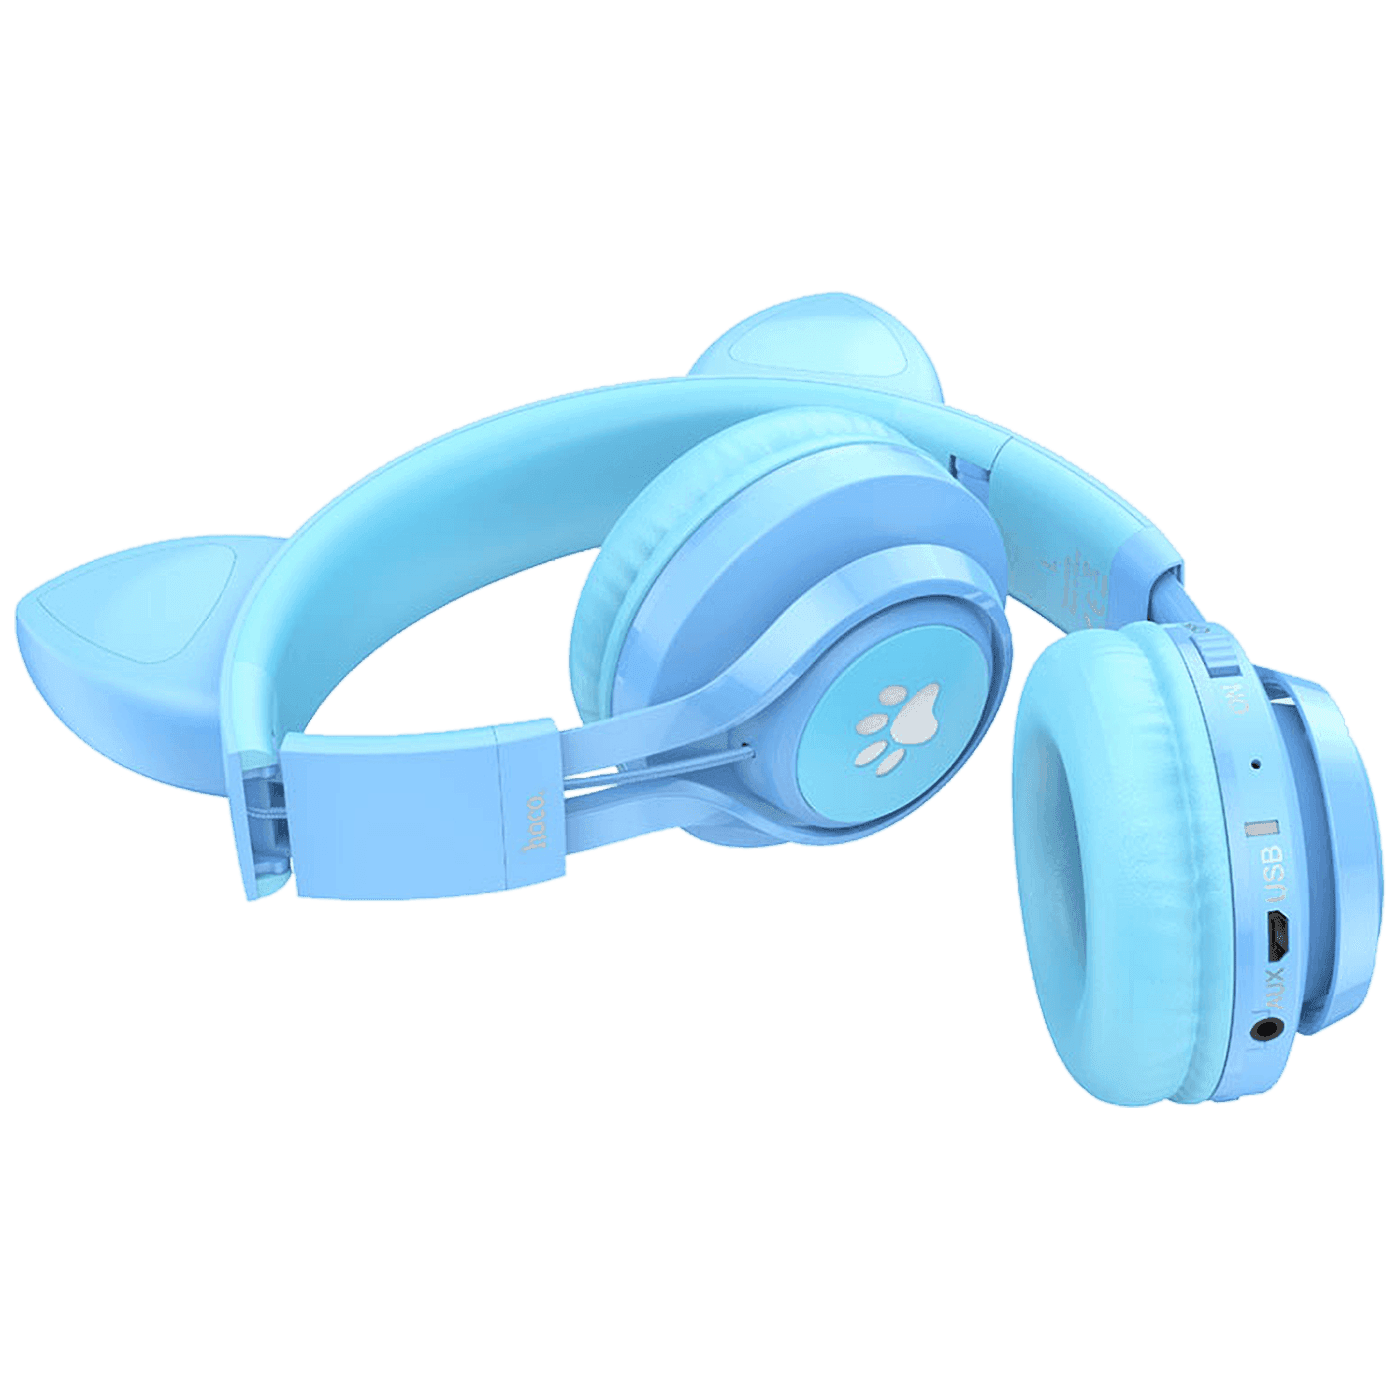 Selected image for HOCO W39 Dečije slušalice Mačje uši, Stereo, Bluetooth v5.3 povezivanje, 400mAh, Plave